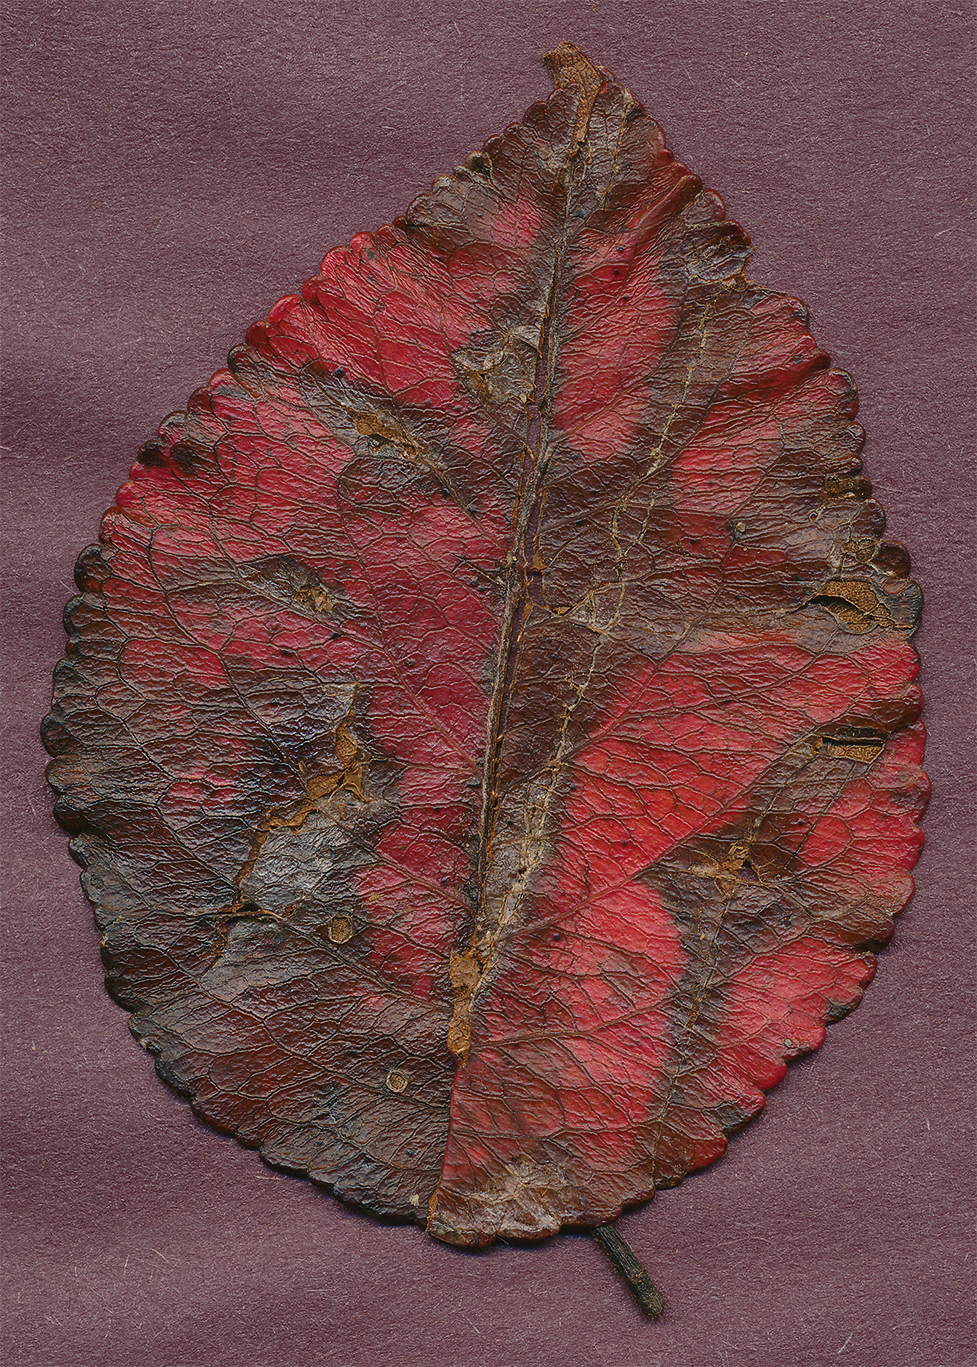 unidentified leaf close-up2